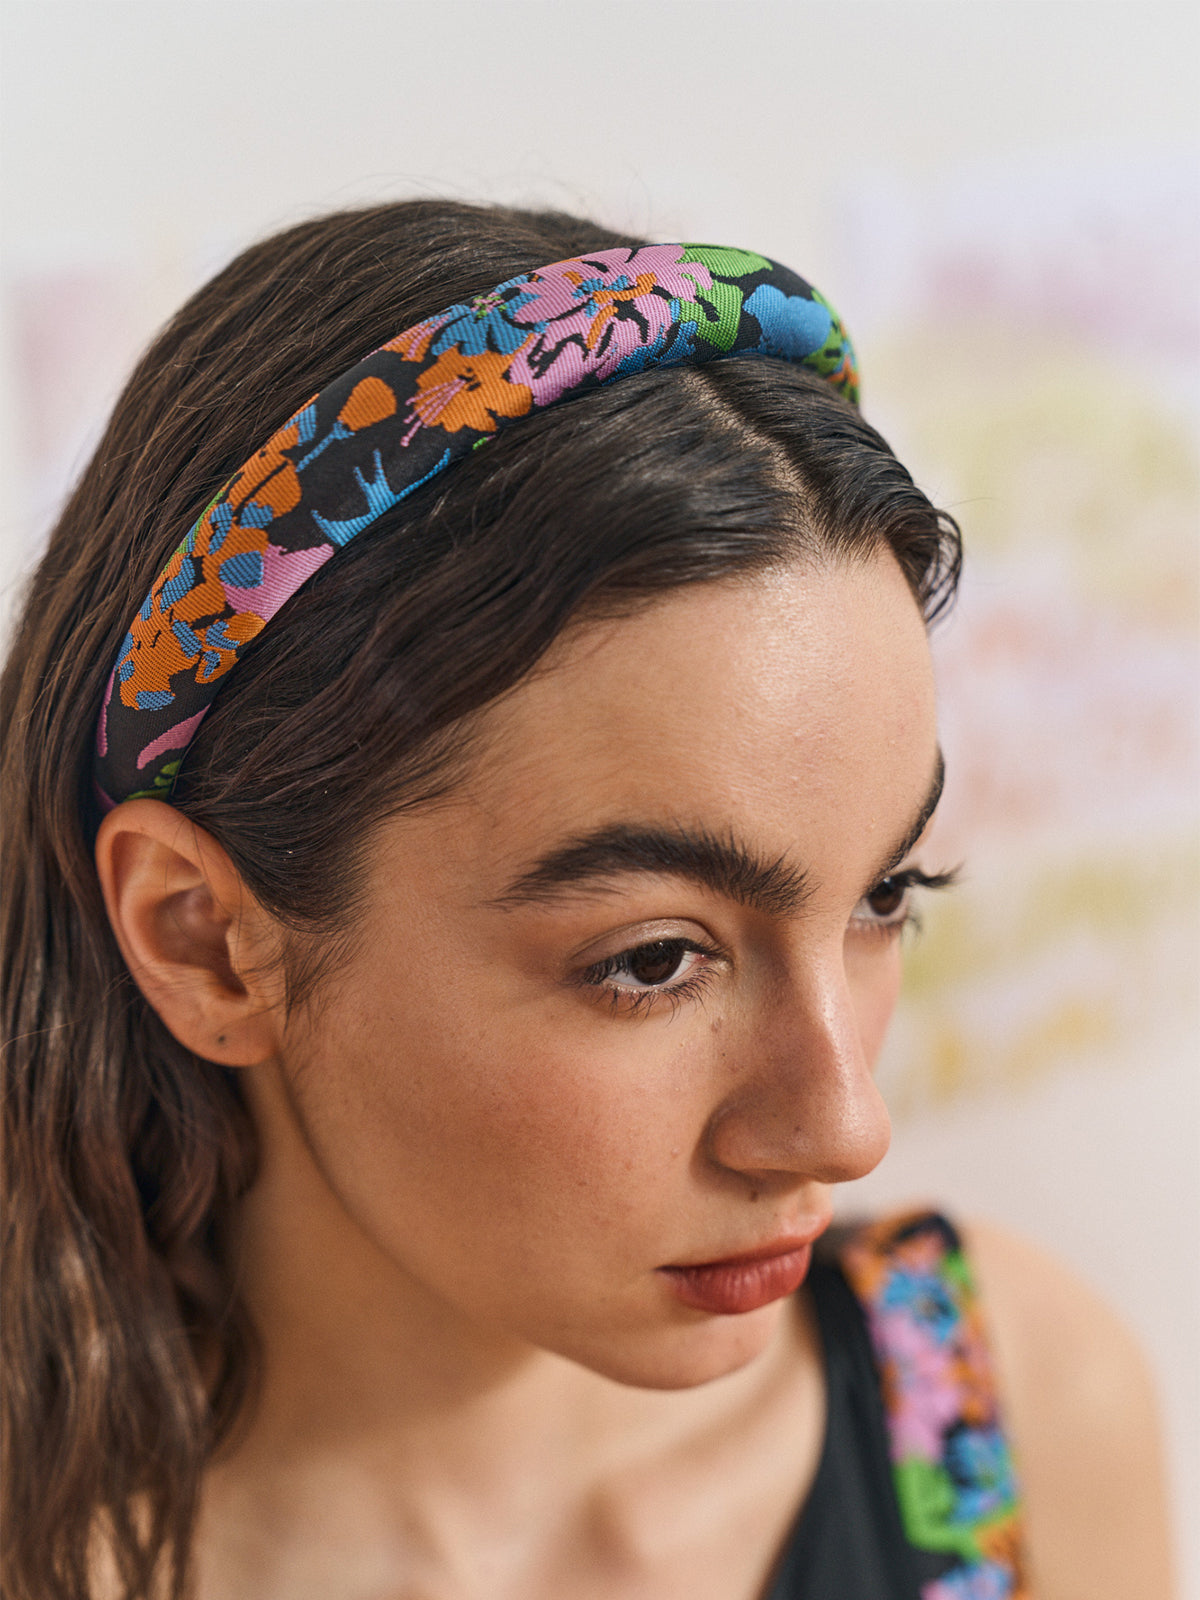 FRIDA x LOST PATTERN "Frida's Garden" Jacquard Hairband - Black - LOST PATTERN Hair Accessories